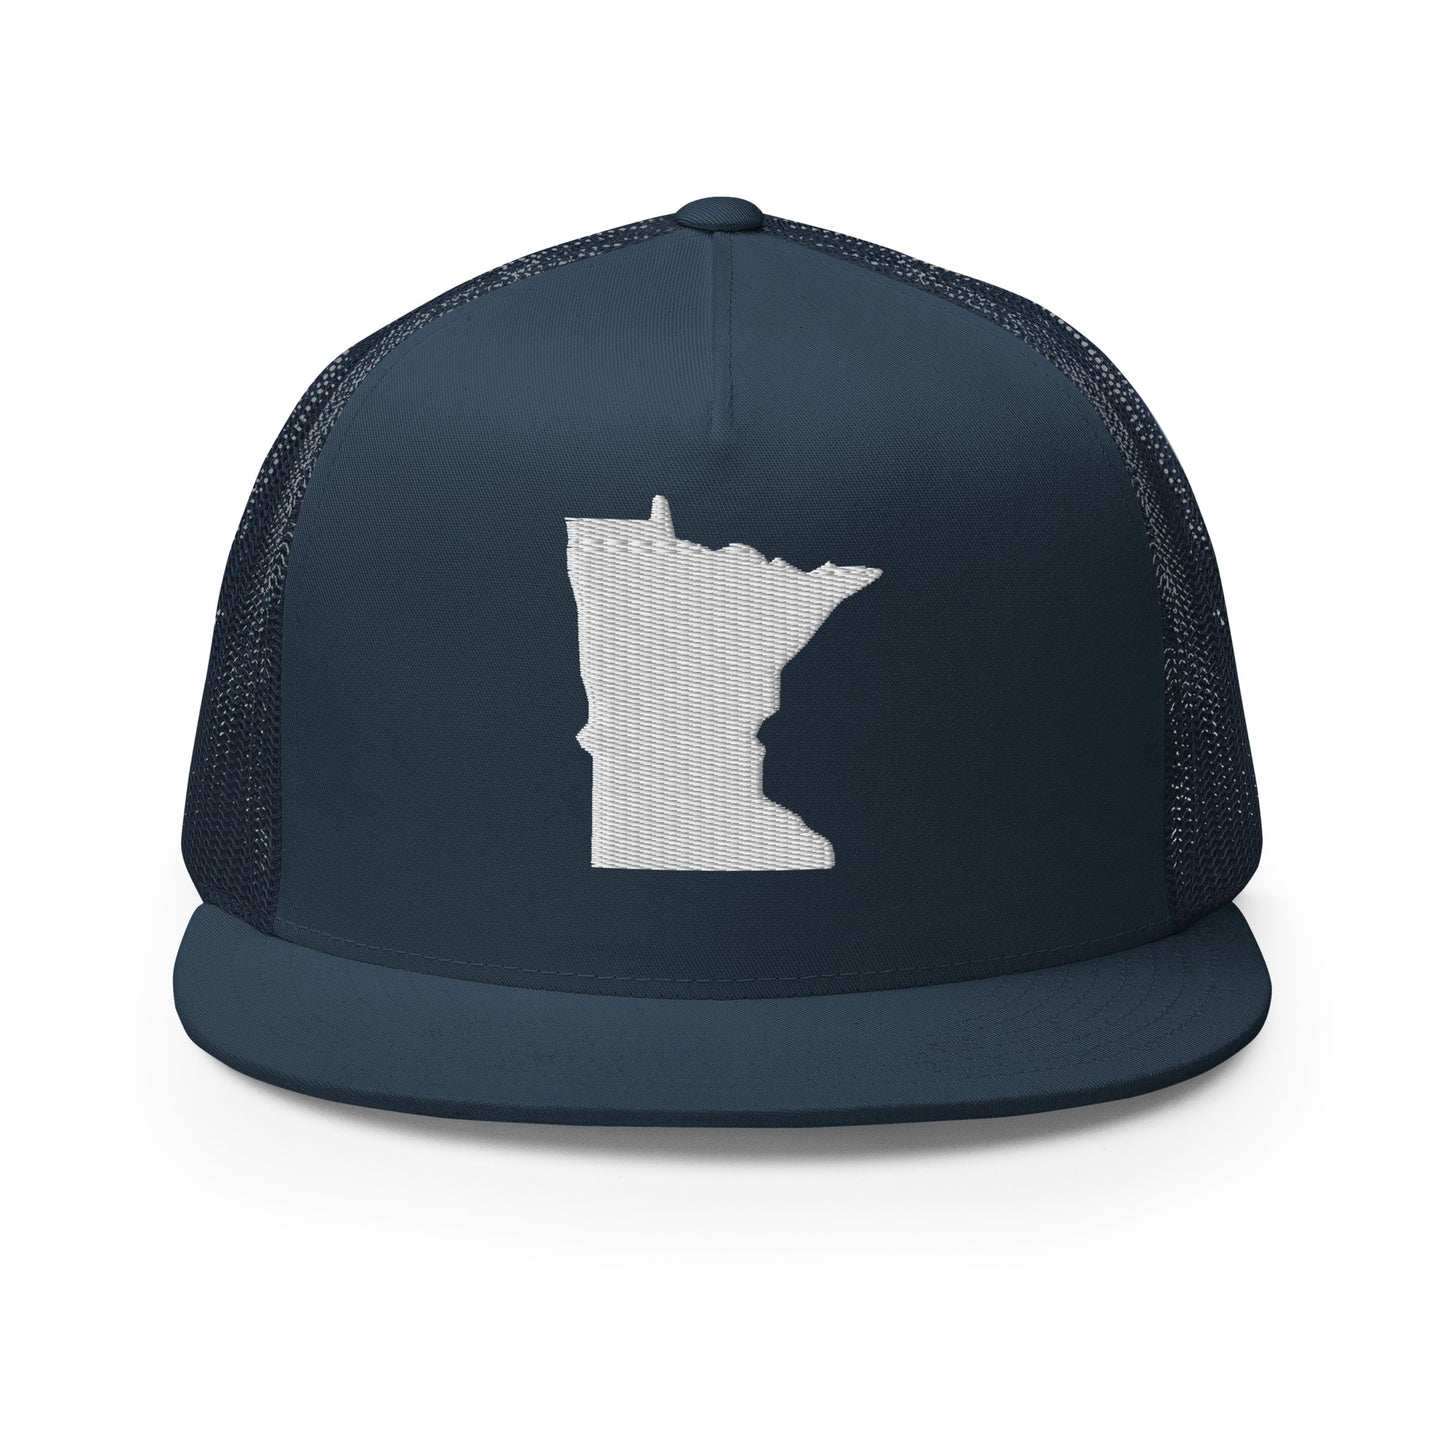 Minnesota State Silhouette High 5 Panel A-Frame Snapback Trucker Hat